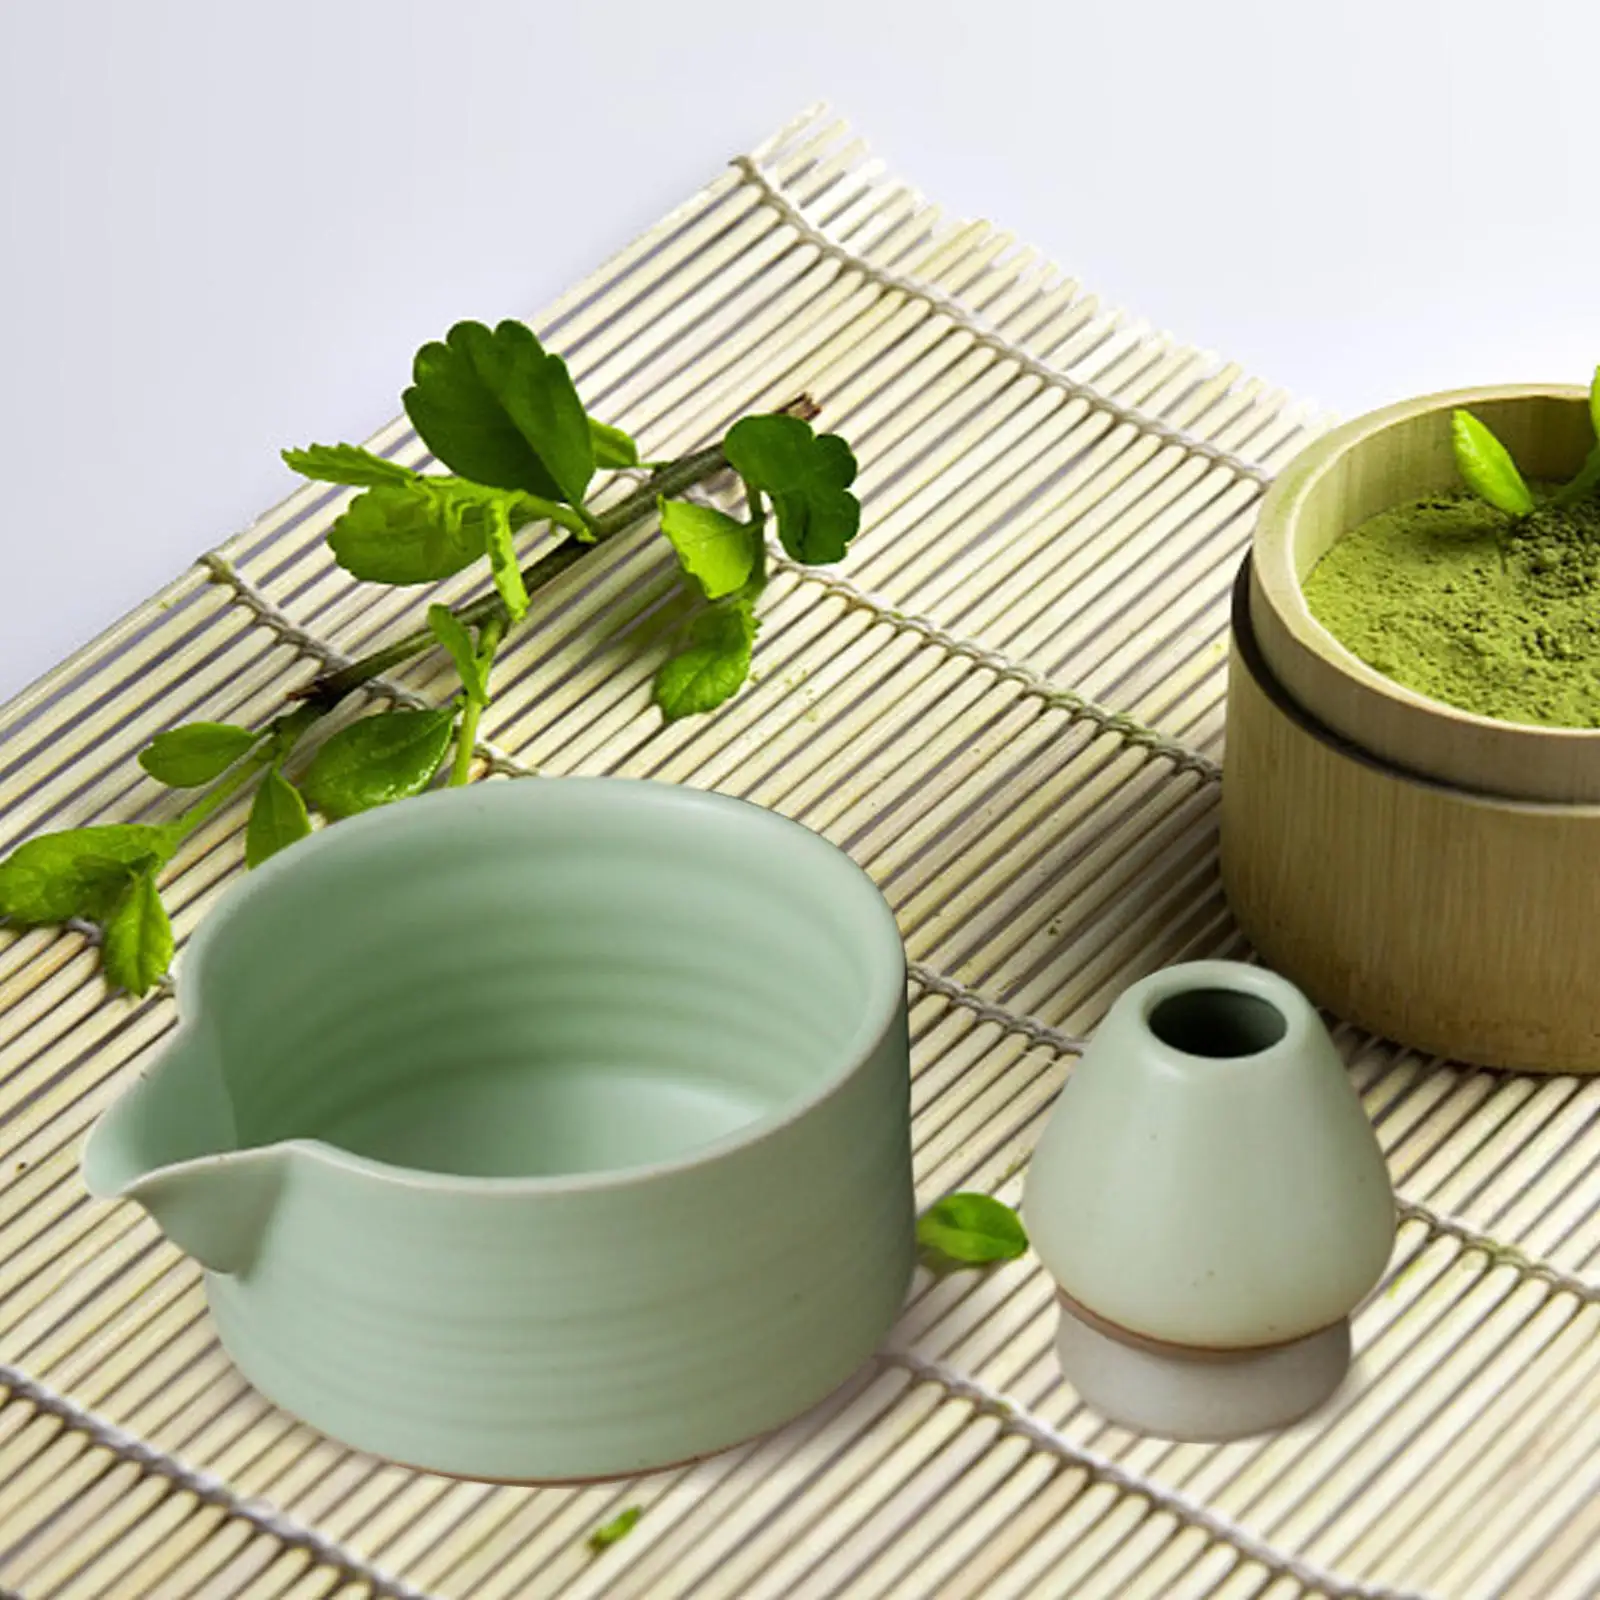 2x Japanese Ceramic Matcha Bowl Matcha Ceramic Bowl for Japanese Matcha Preparation Beverage Tea Lovers Holiday Gift